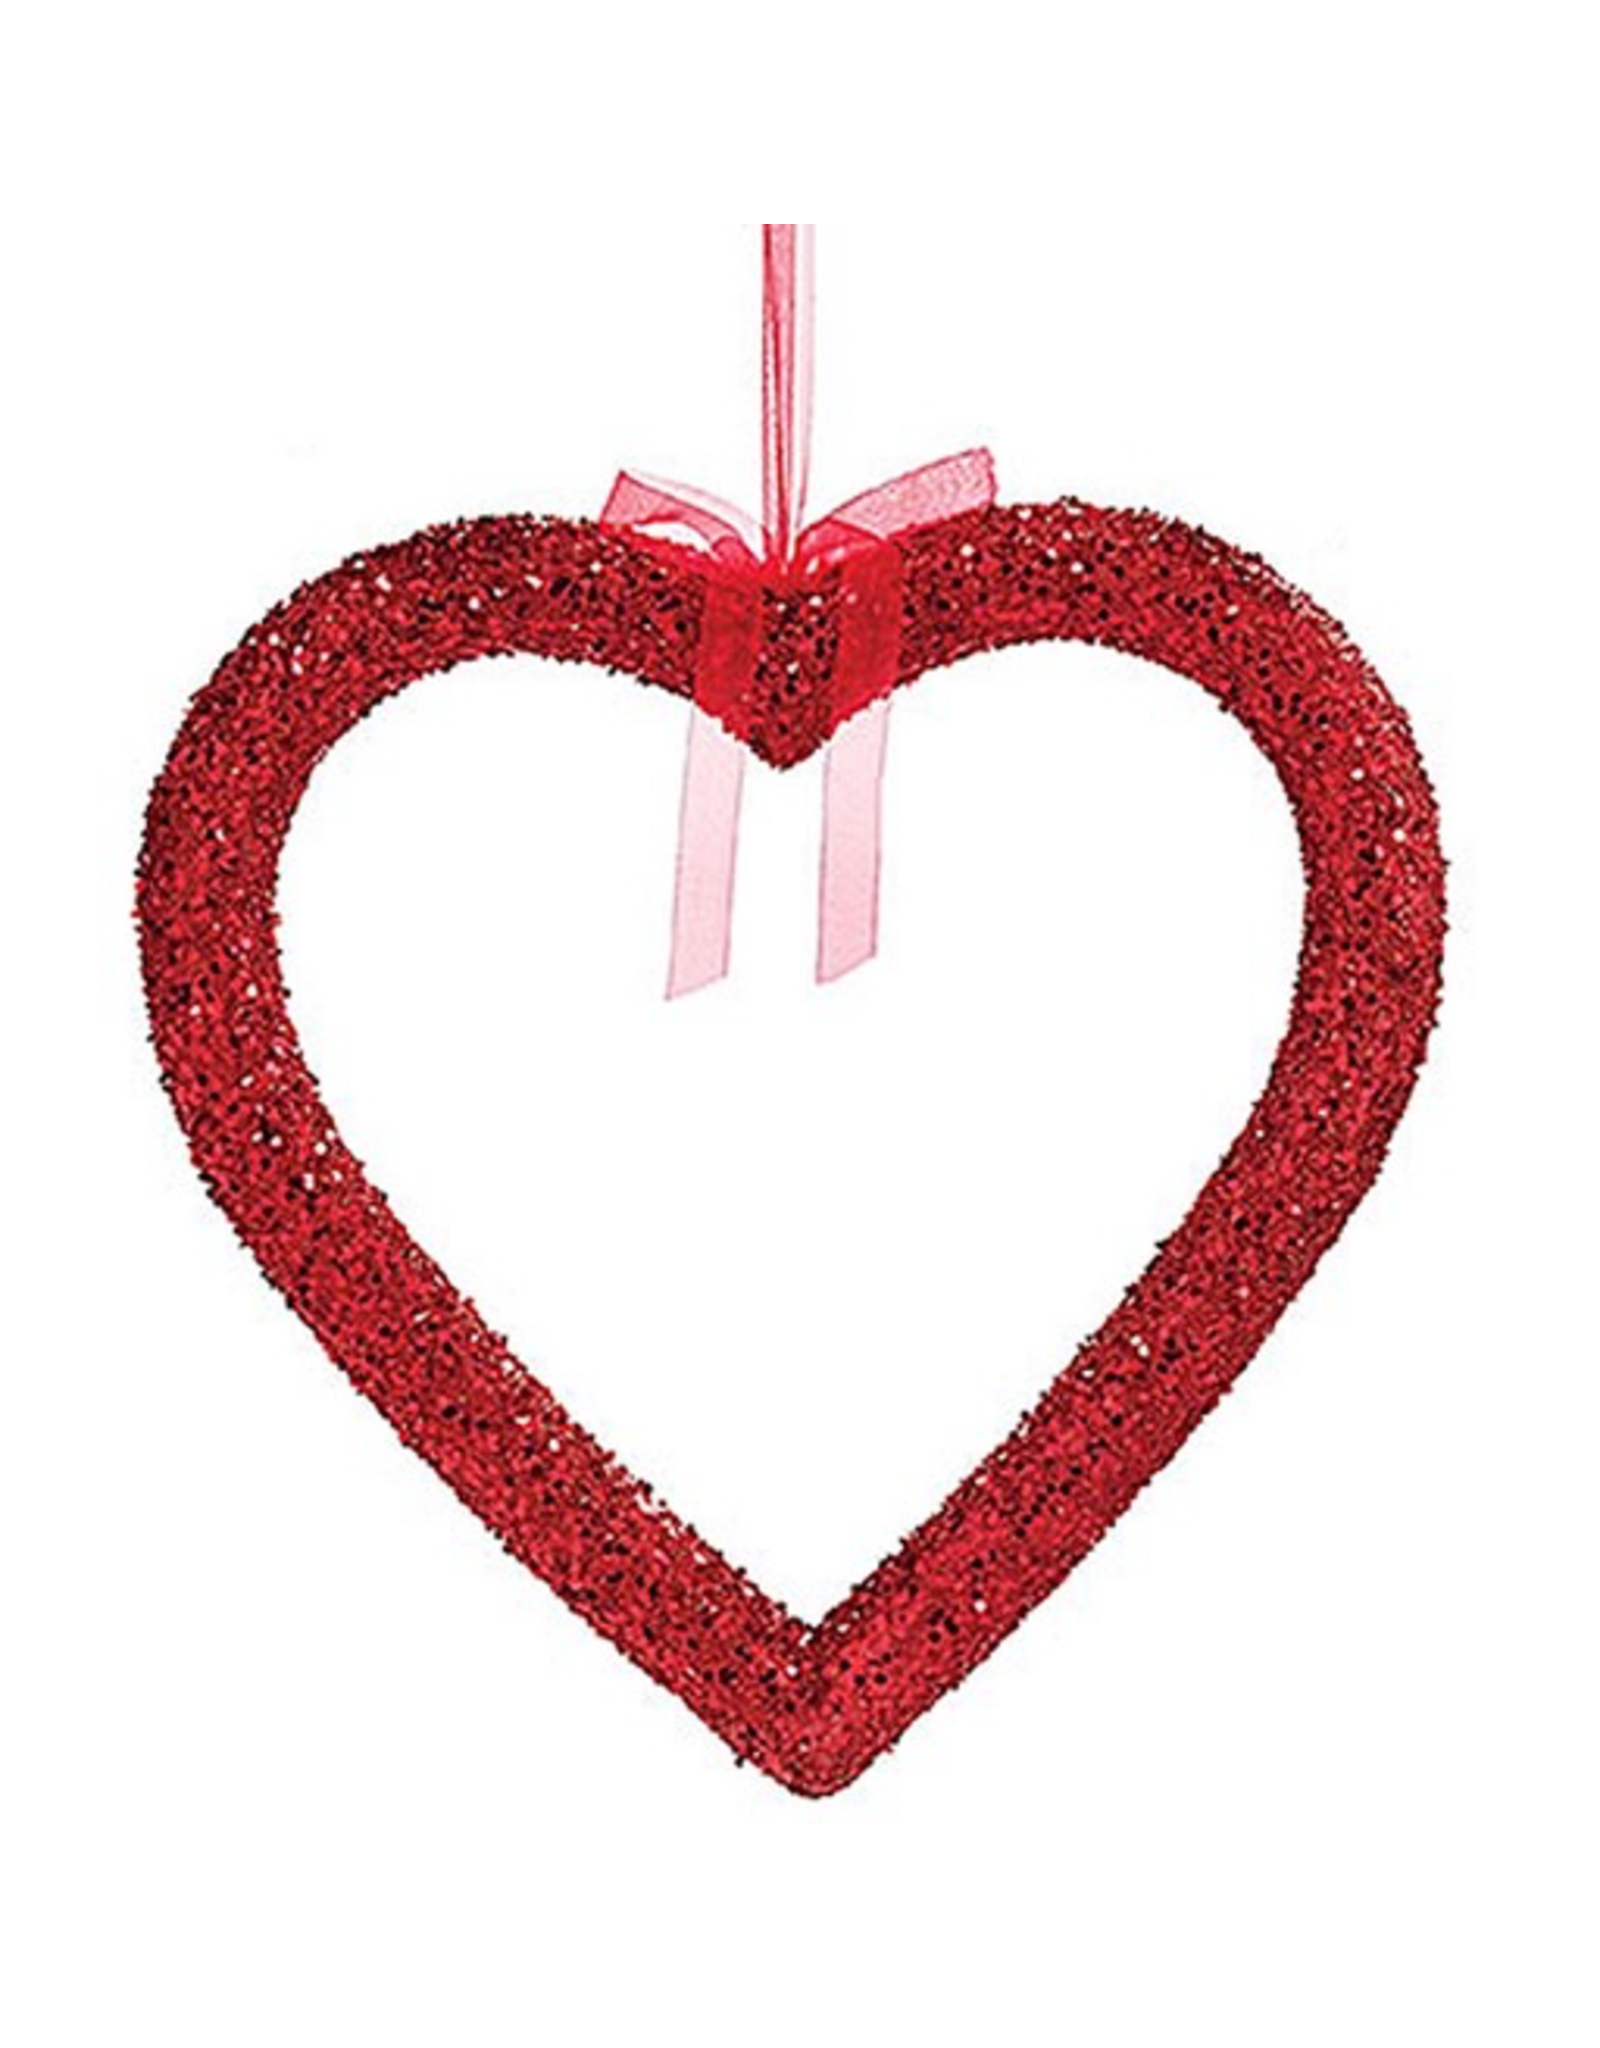 Burton and Burton Large Hanging Red Glittered Heart 20x20 inch